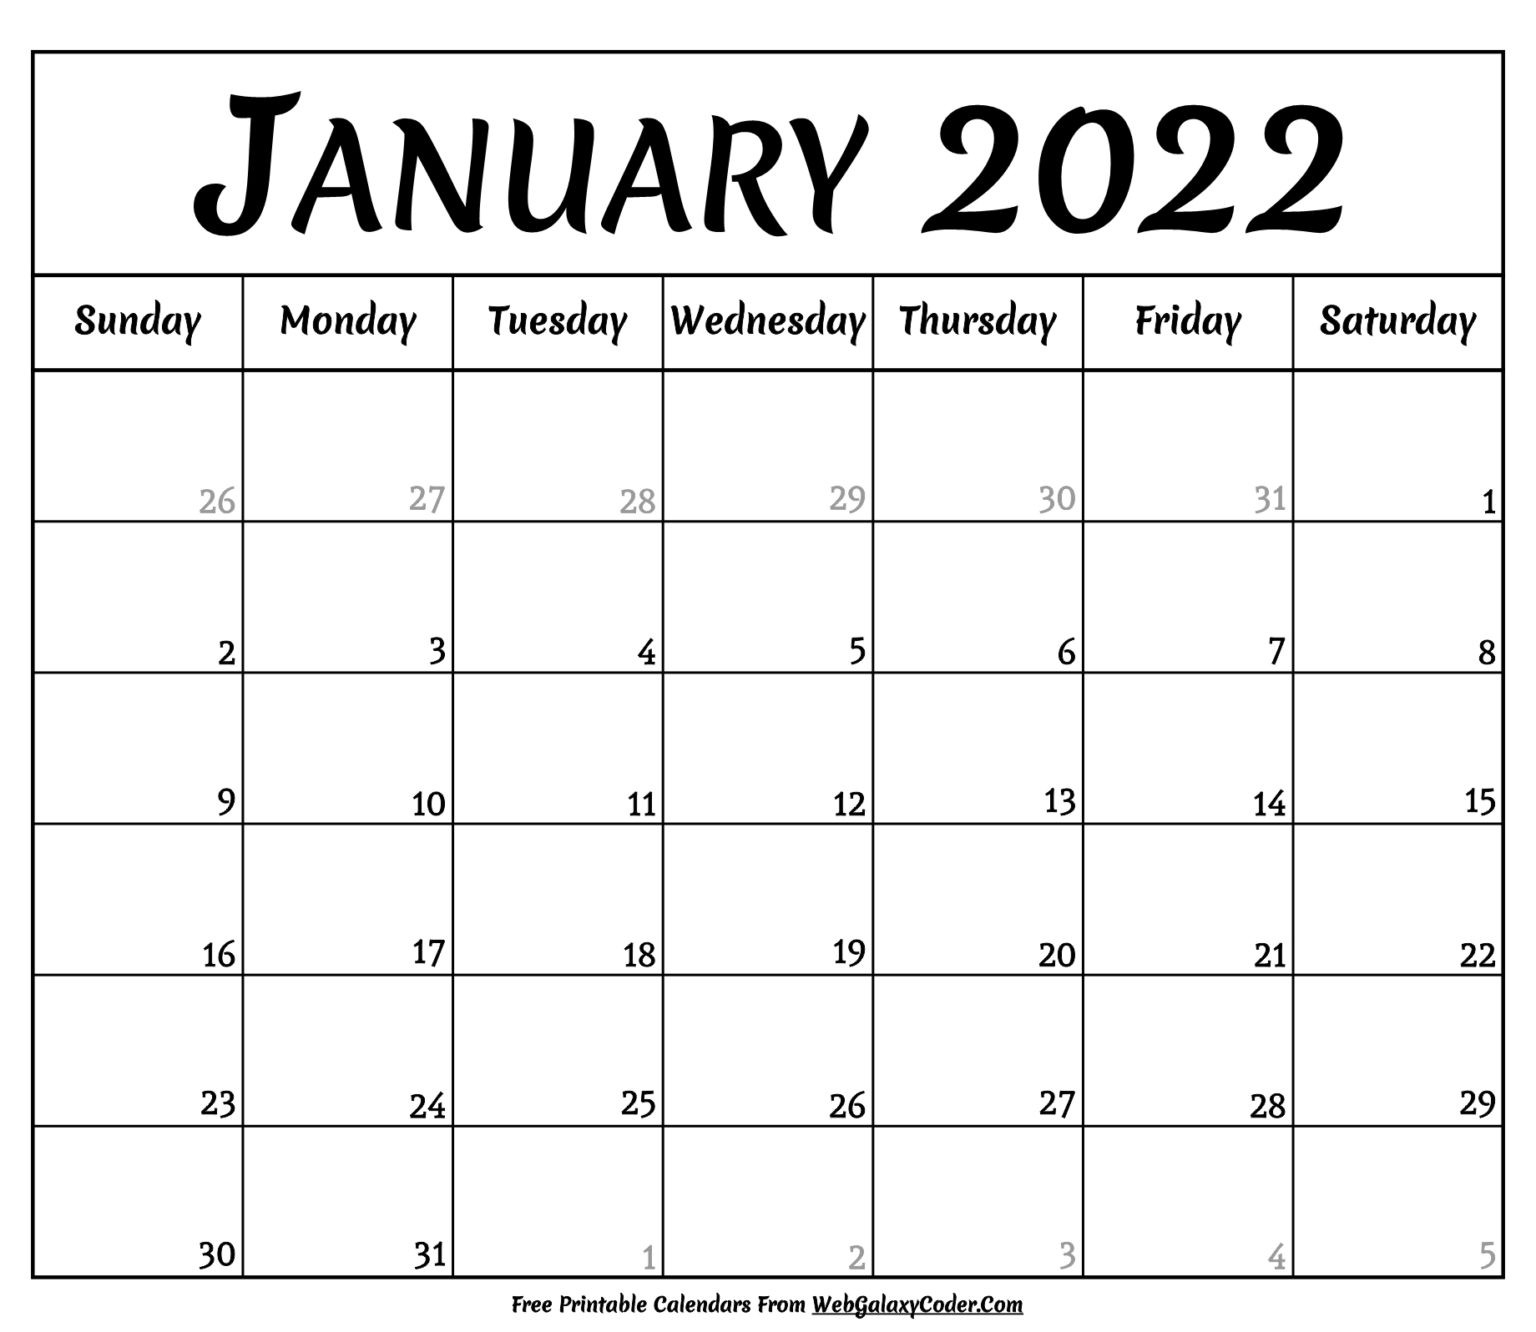 January 2022 Calendar - Printable Format - Print Now  Calendar 2022 Festival